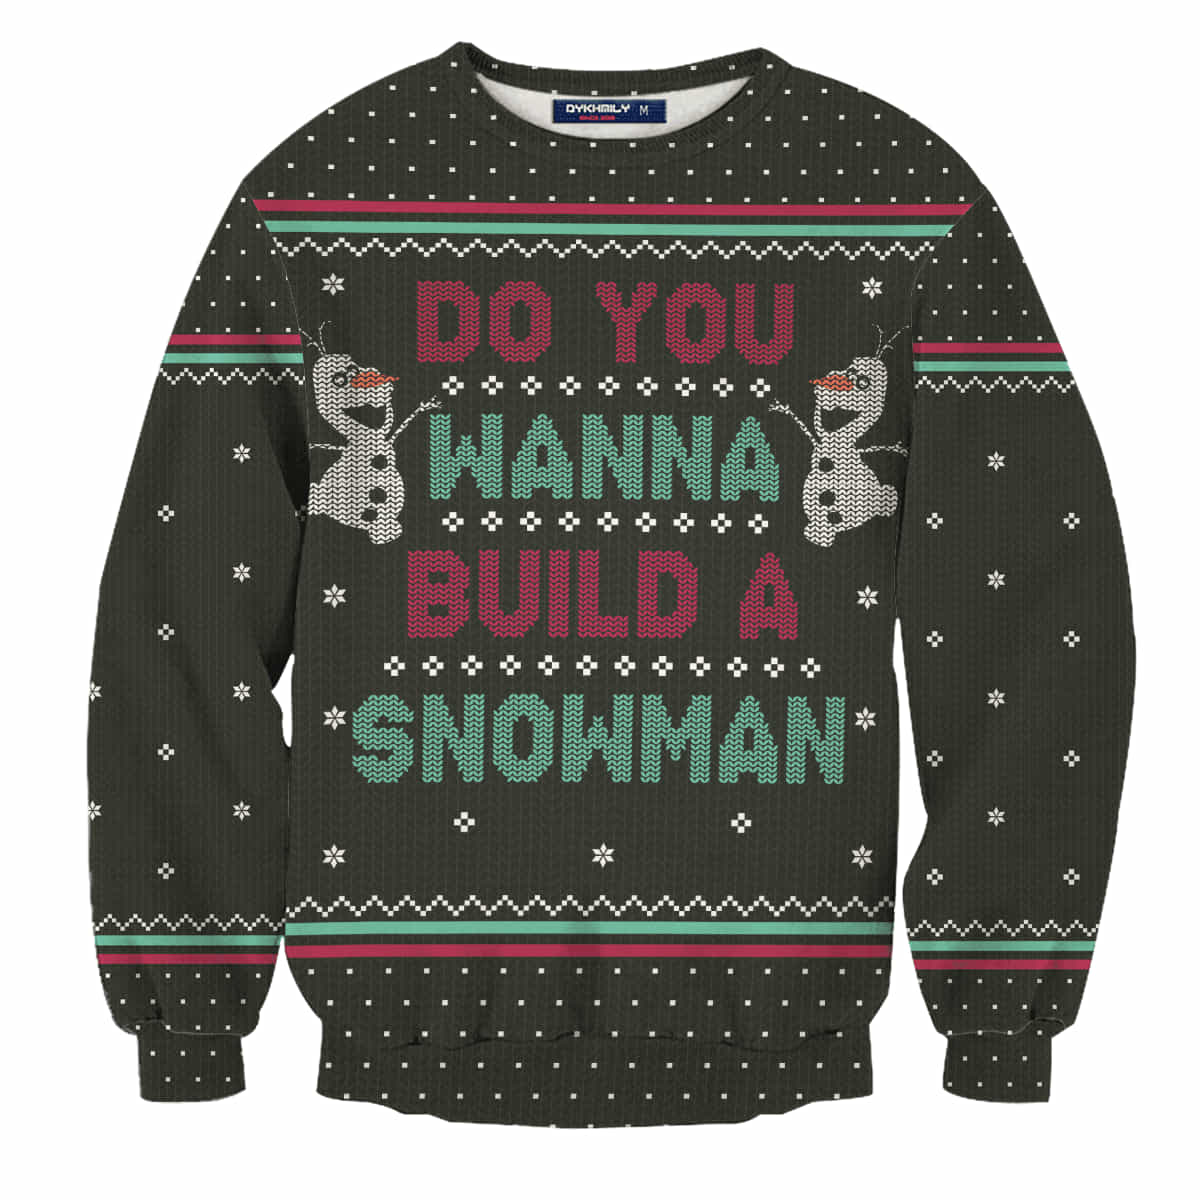 Do You Wanna Build A Snowman Wool Knitted Sweater, Frozen All Over Print Sweatshirt